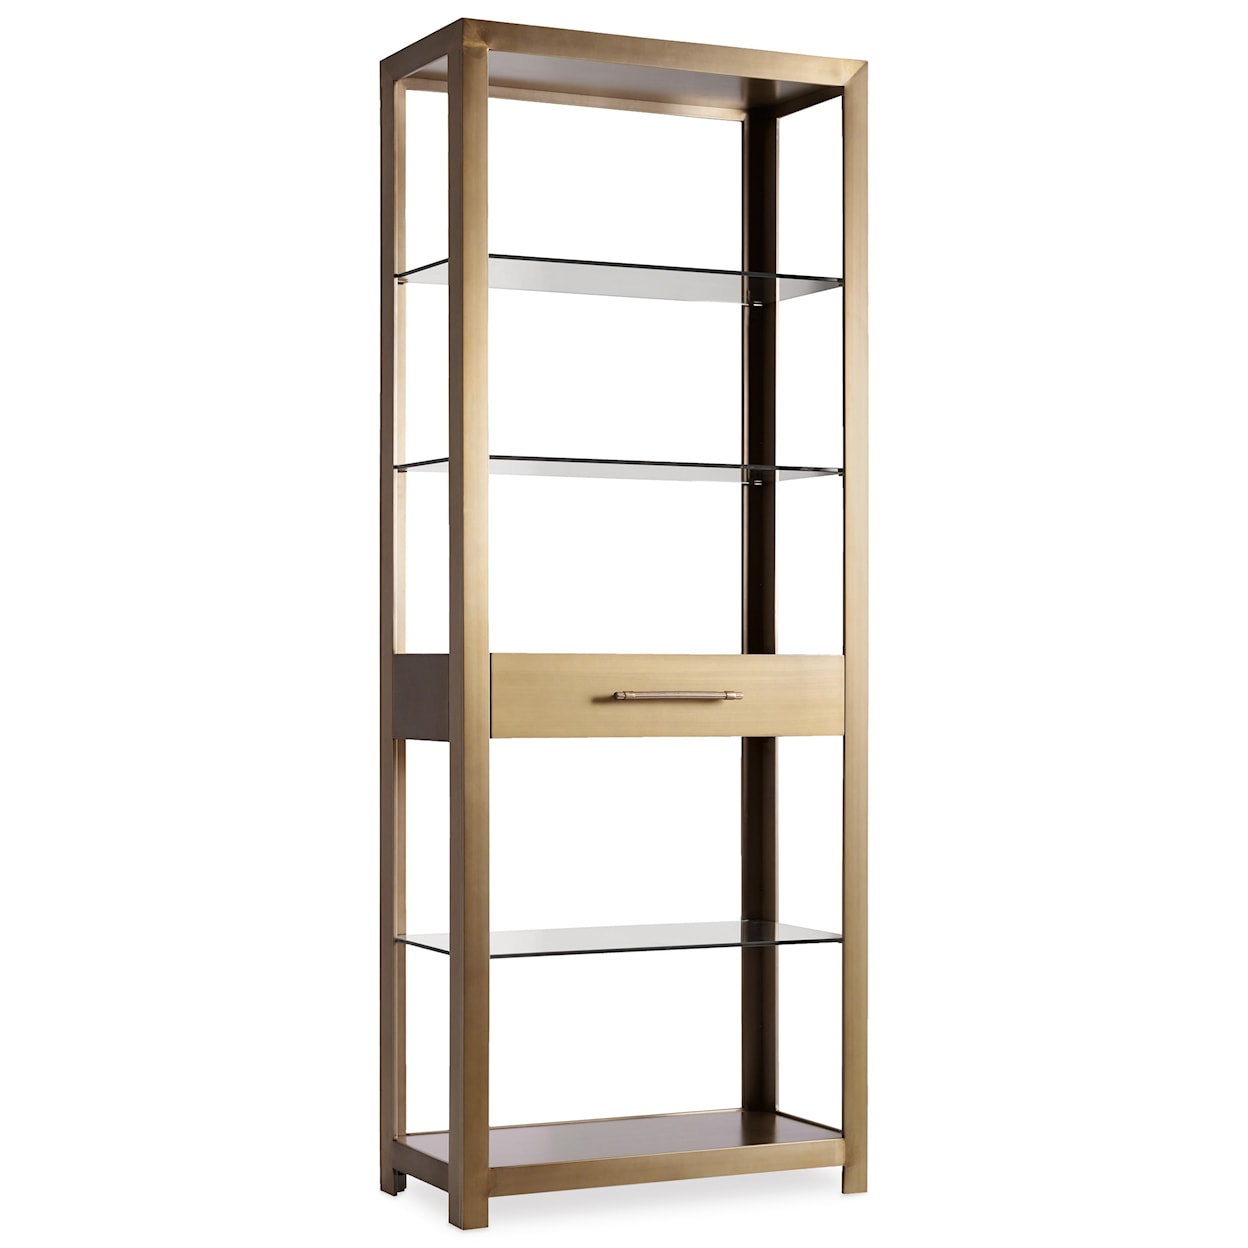 Hooker Furniture Curata 5-Shelft Open Bookcase